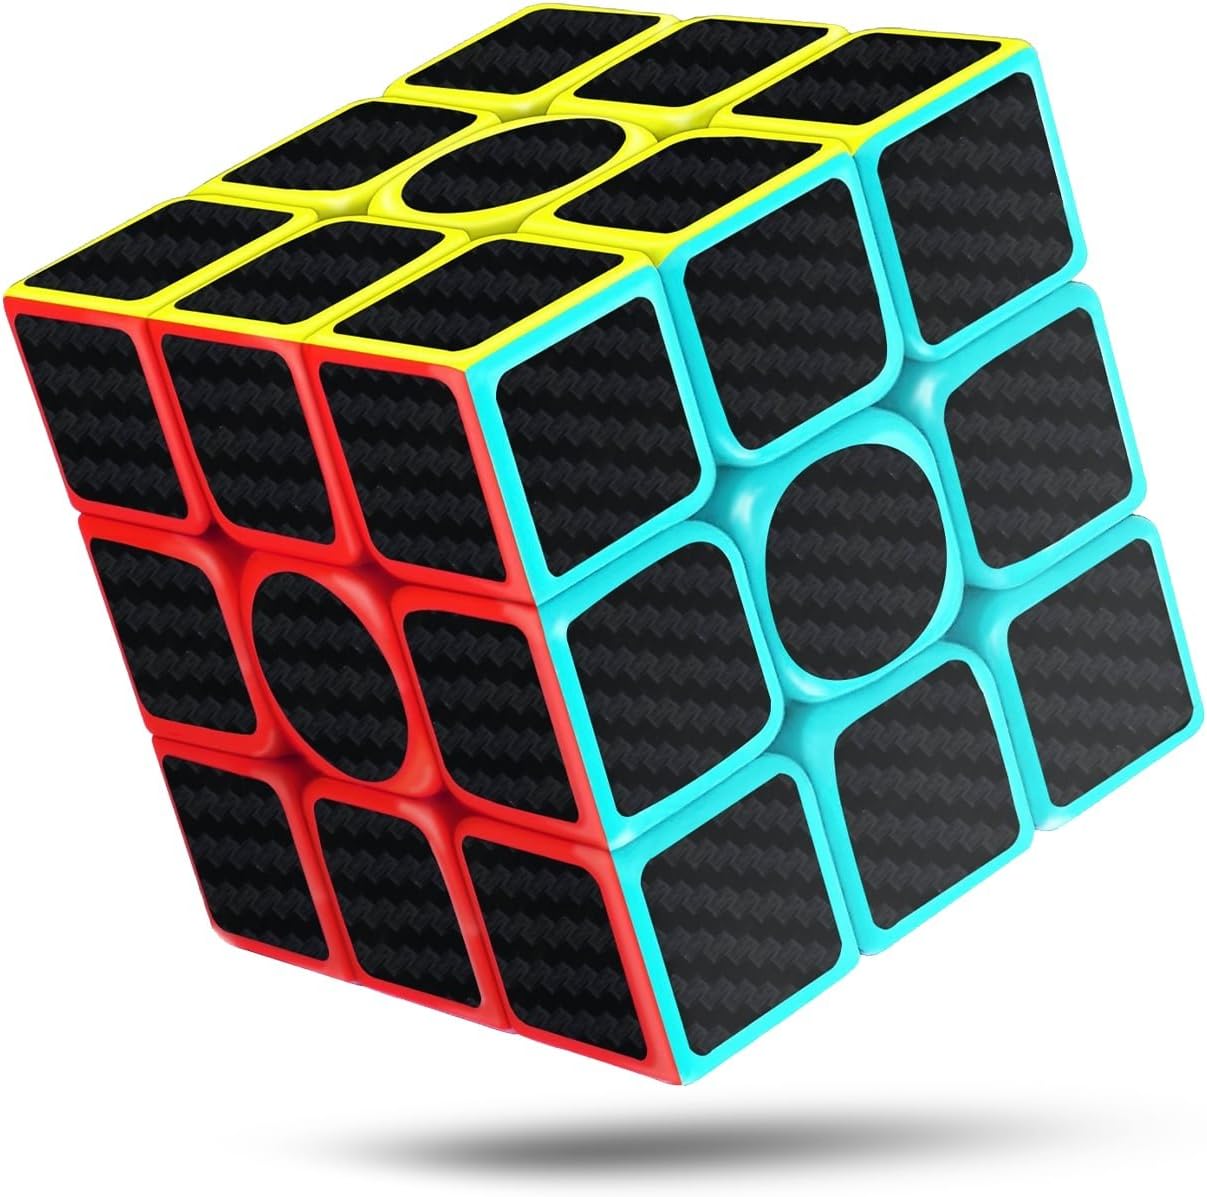 Original Rubiks Cube 3x3x3 Speed Magic Cube Durable Smooth Game Classic Puzzle 